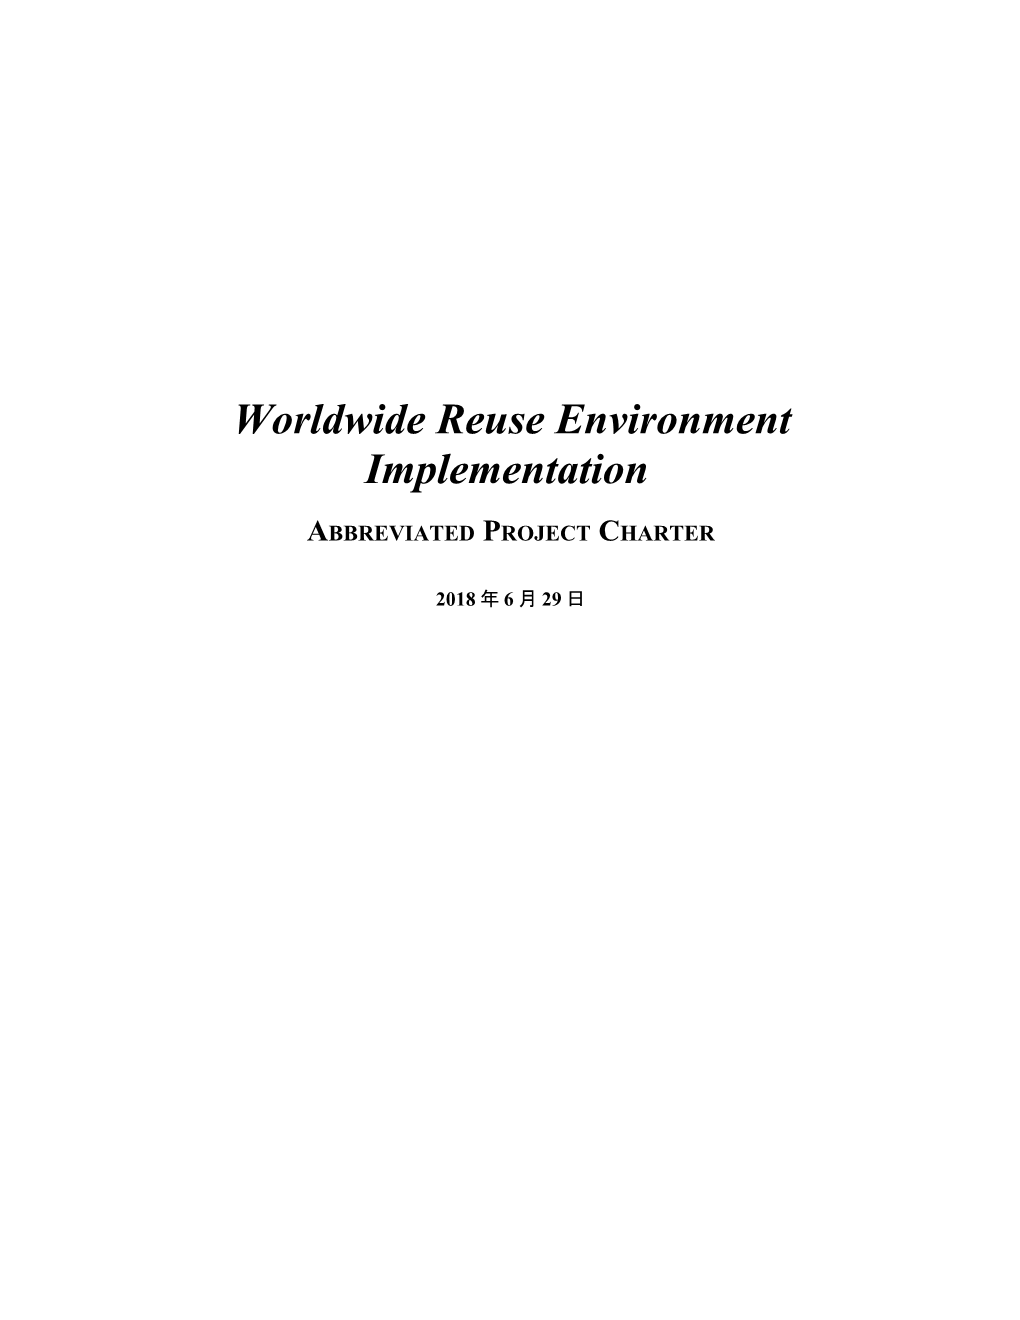 Reuse Environment Implementation Charter